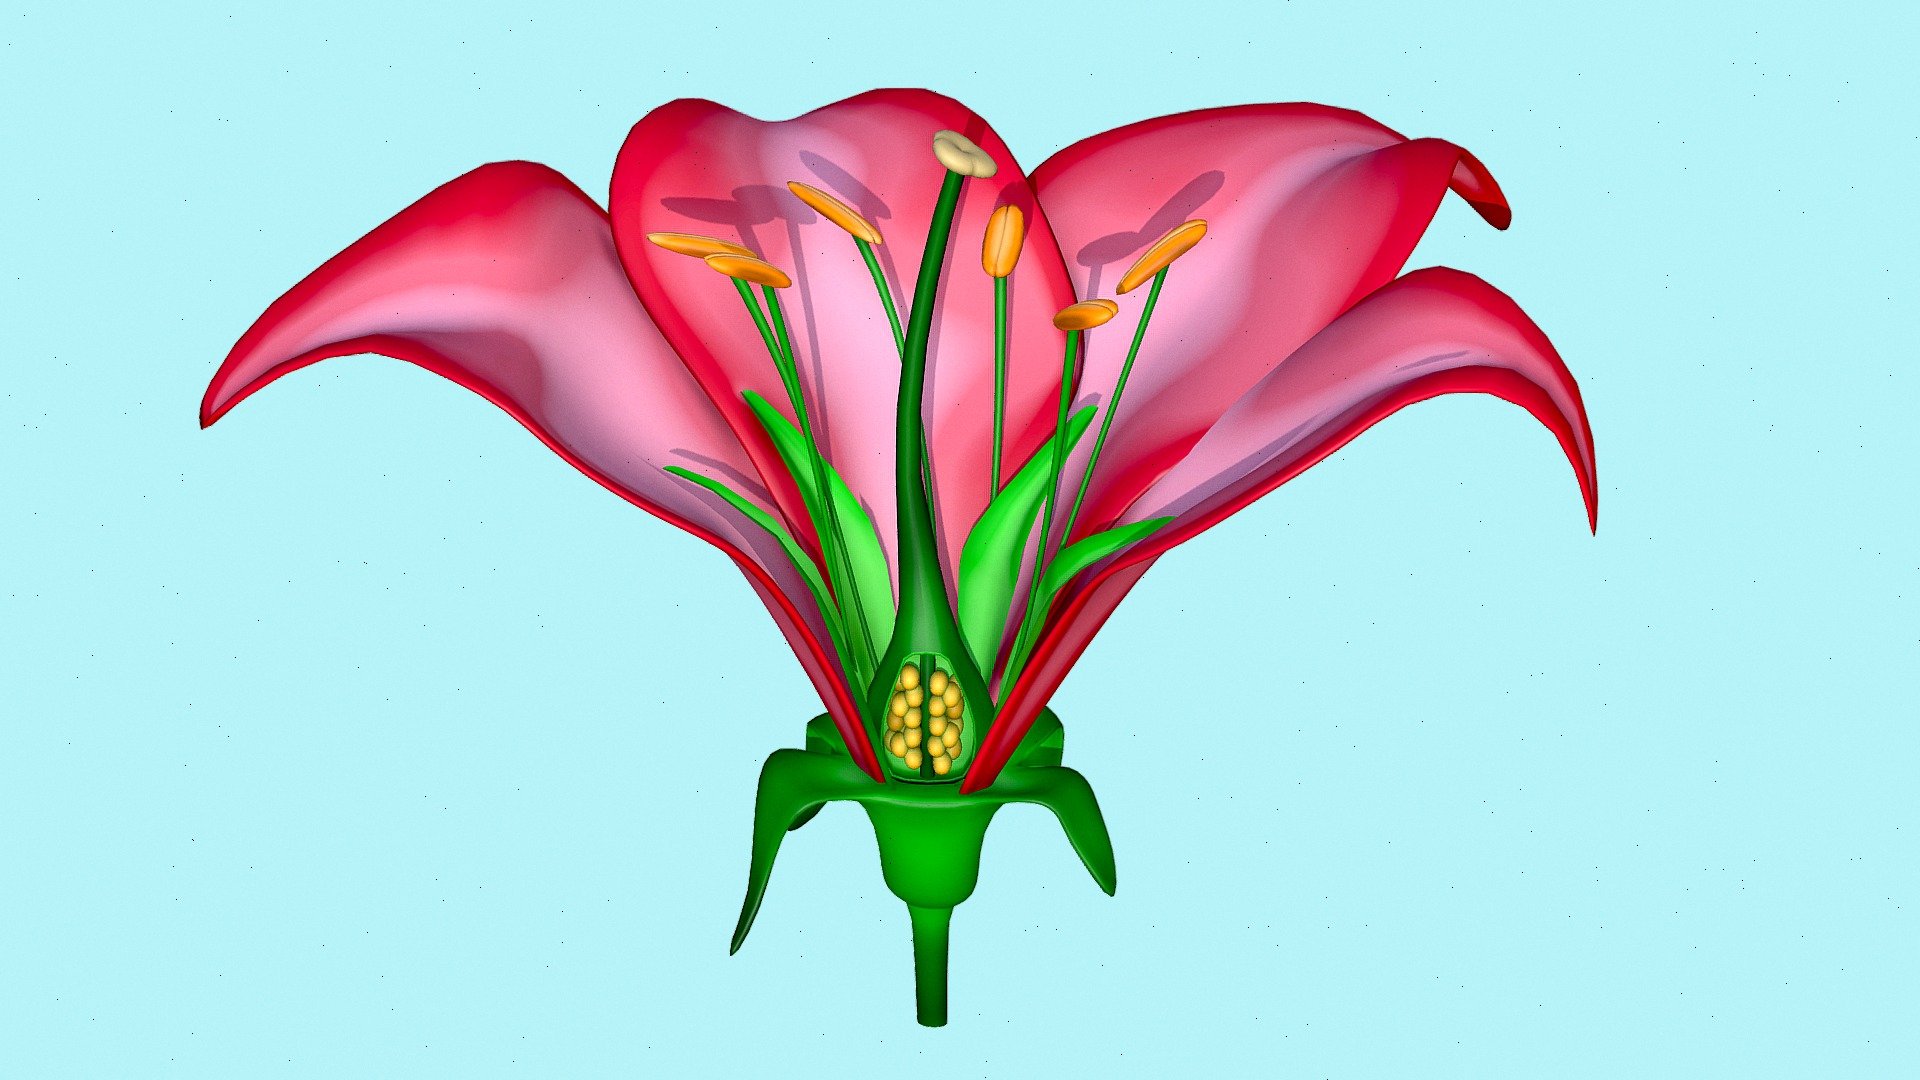 Flower Anatomy, Parts of a Flower